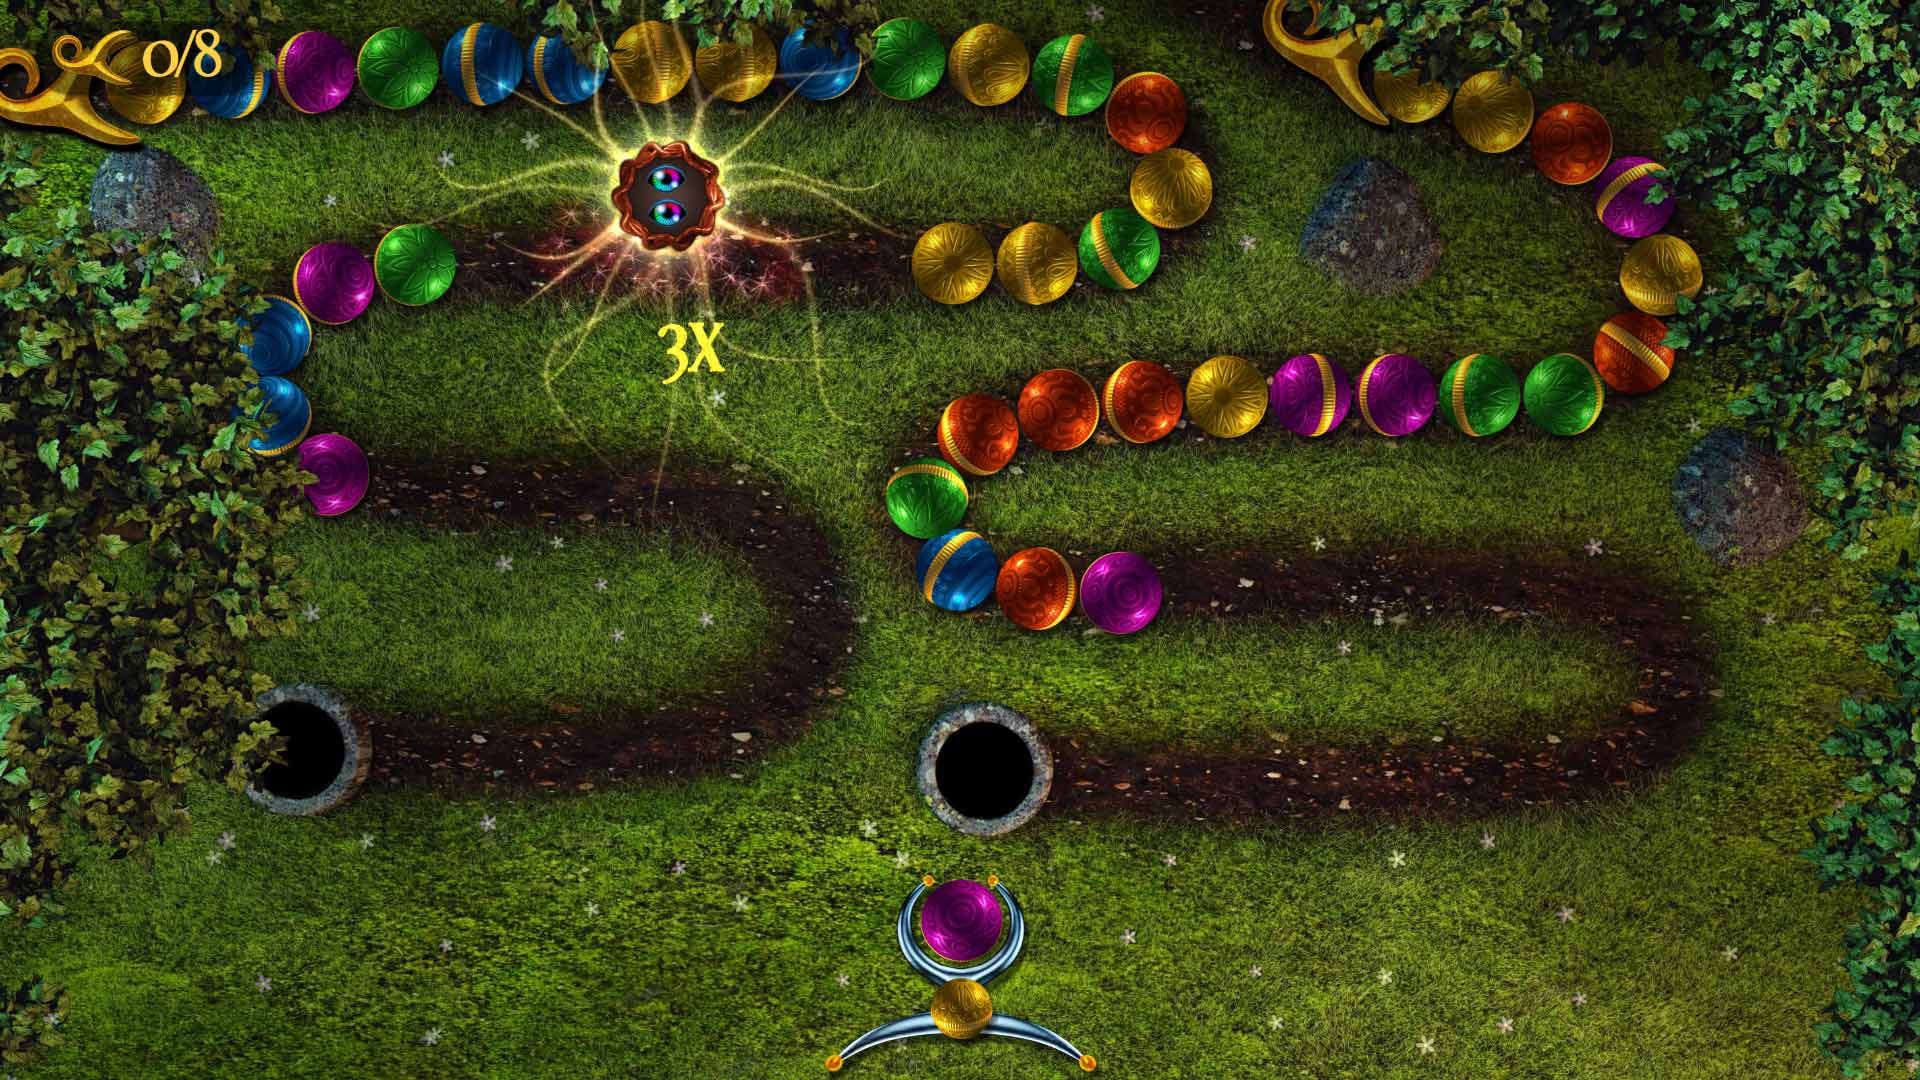 Sparkle Unleashed screenshot